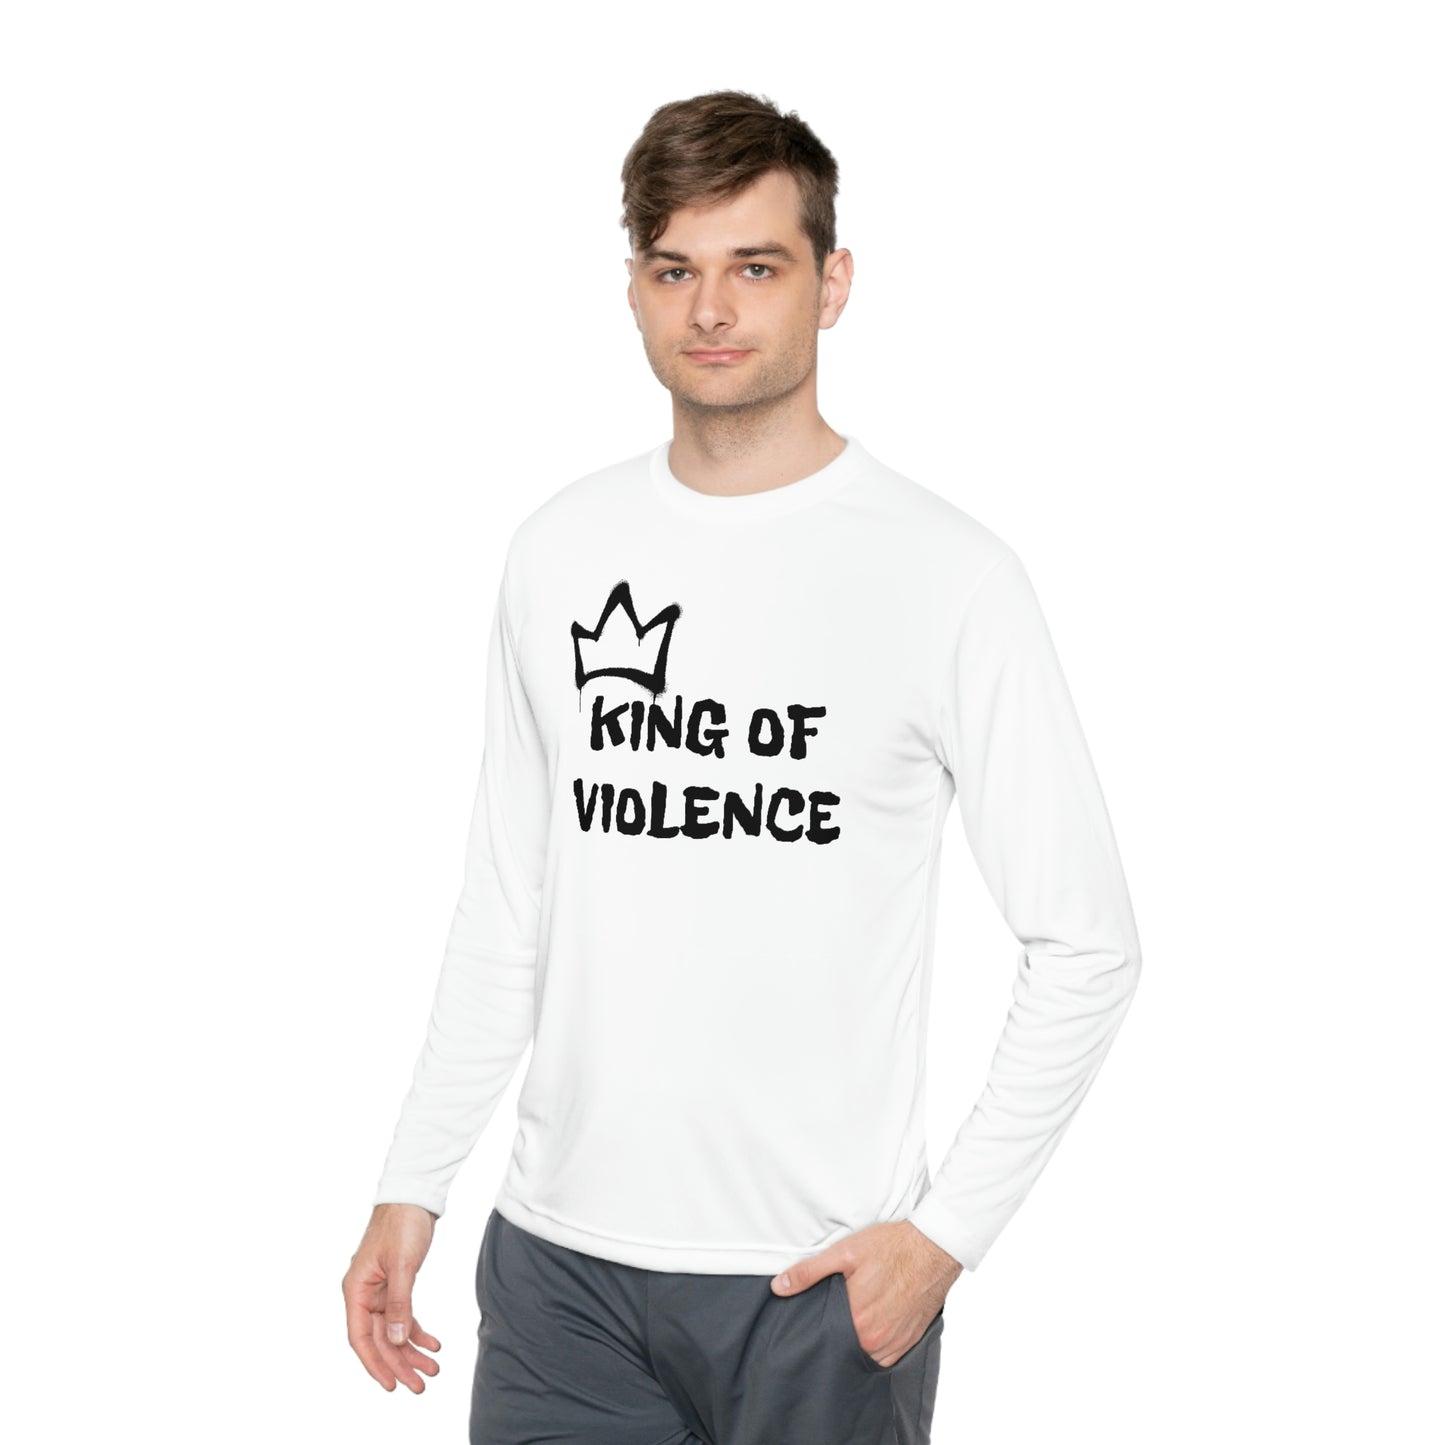 KING OF VIOLENCE Unisex Lightweight Long Sleeve Tee